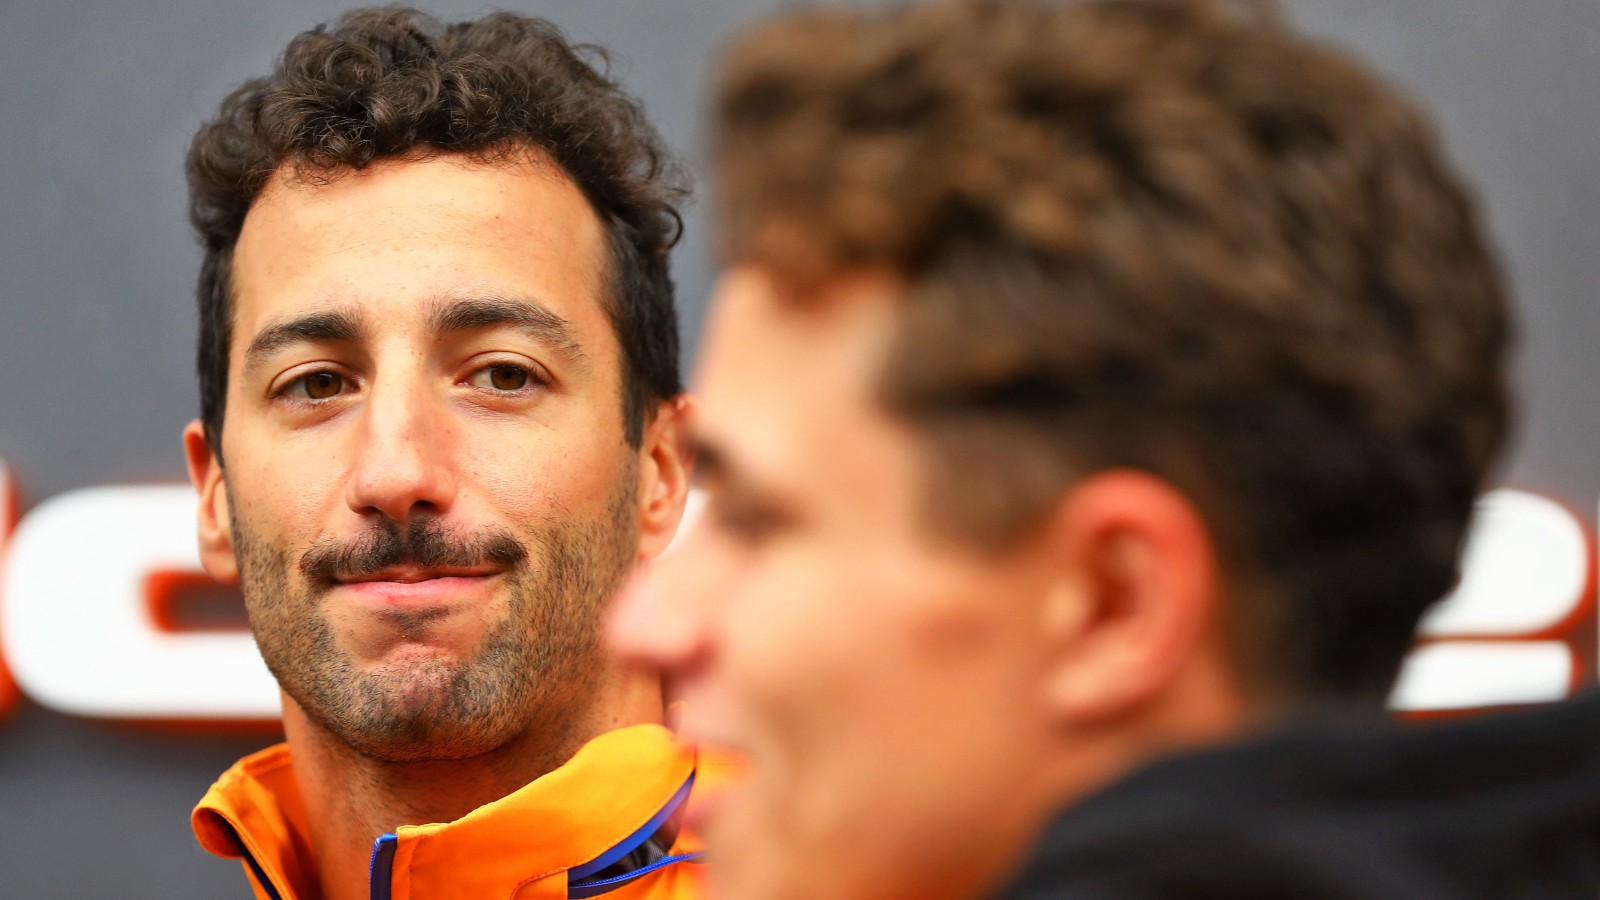 Daniel Ricciardo looks at McLaren team-mate Lando Norris. Brazil November 2021.